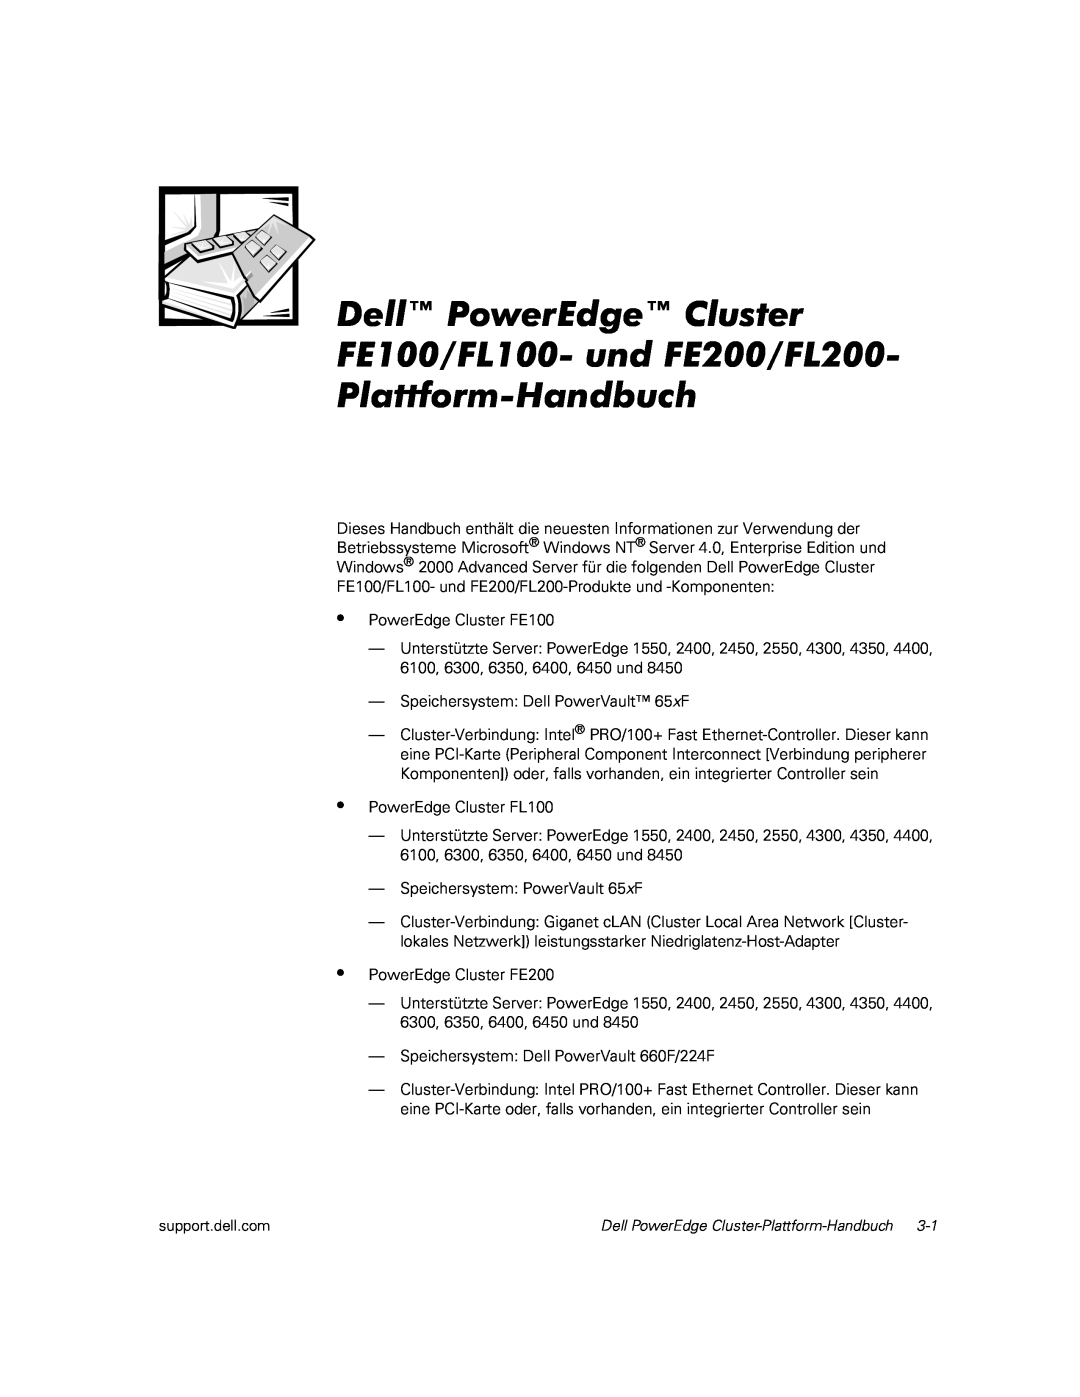 Dell FL200, FL100, FE200 manual •PowerEdge Cluster FE100 